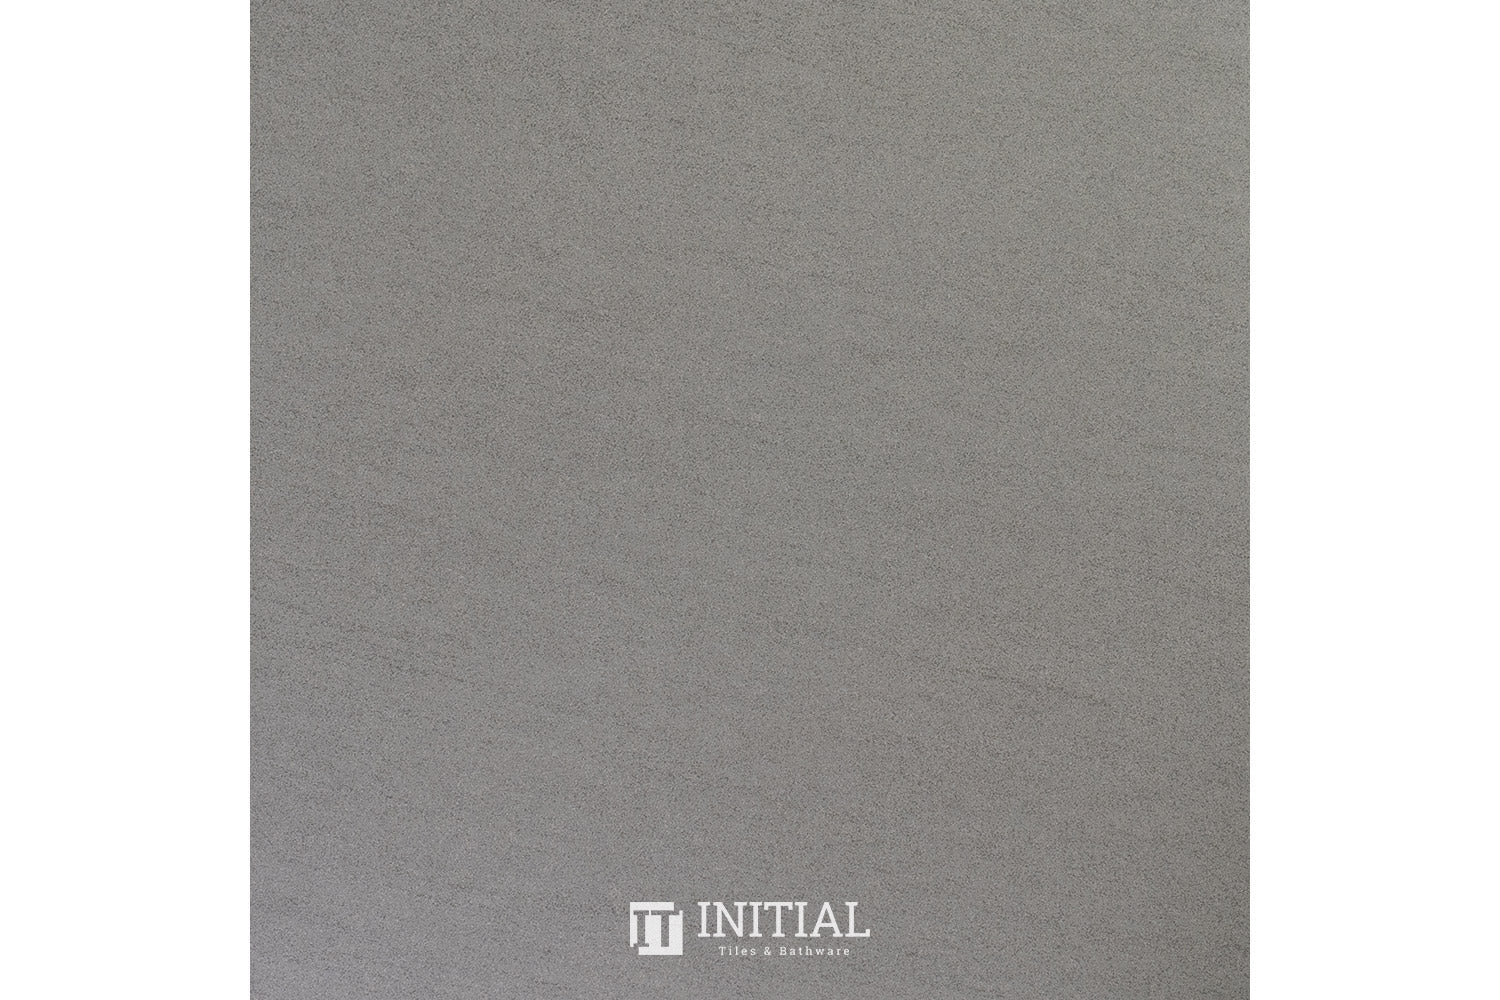 Concrete Look Tile Bluestone Light Grey Lappato 600X600 ,